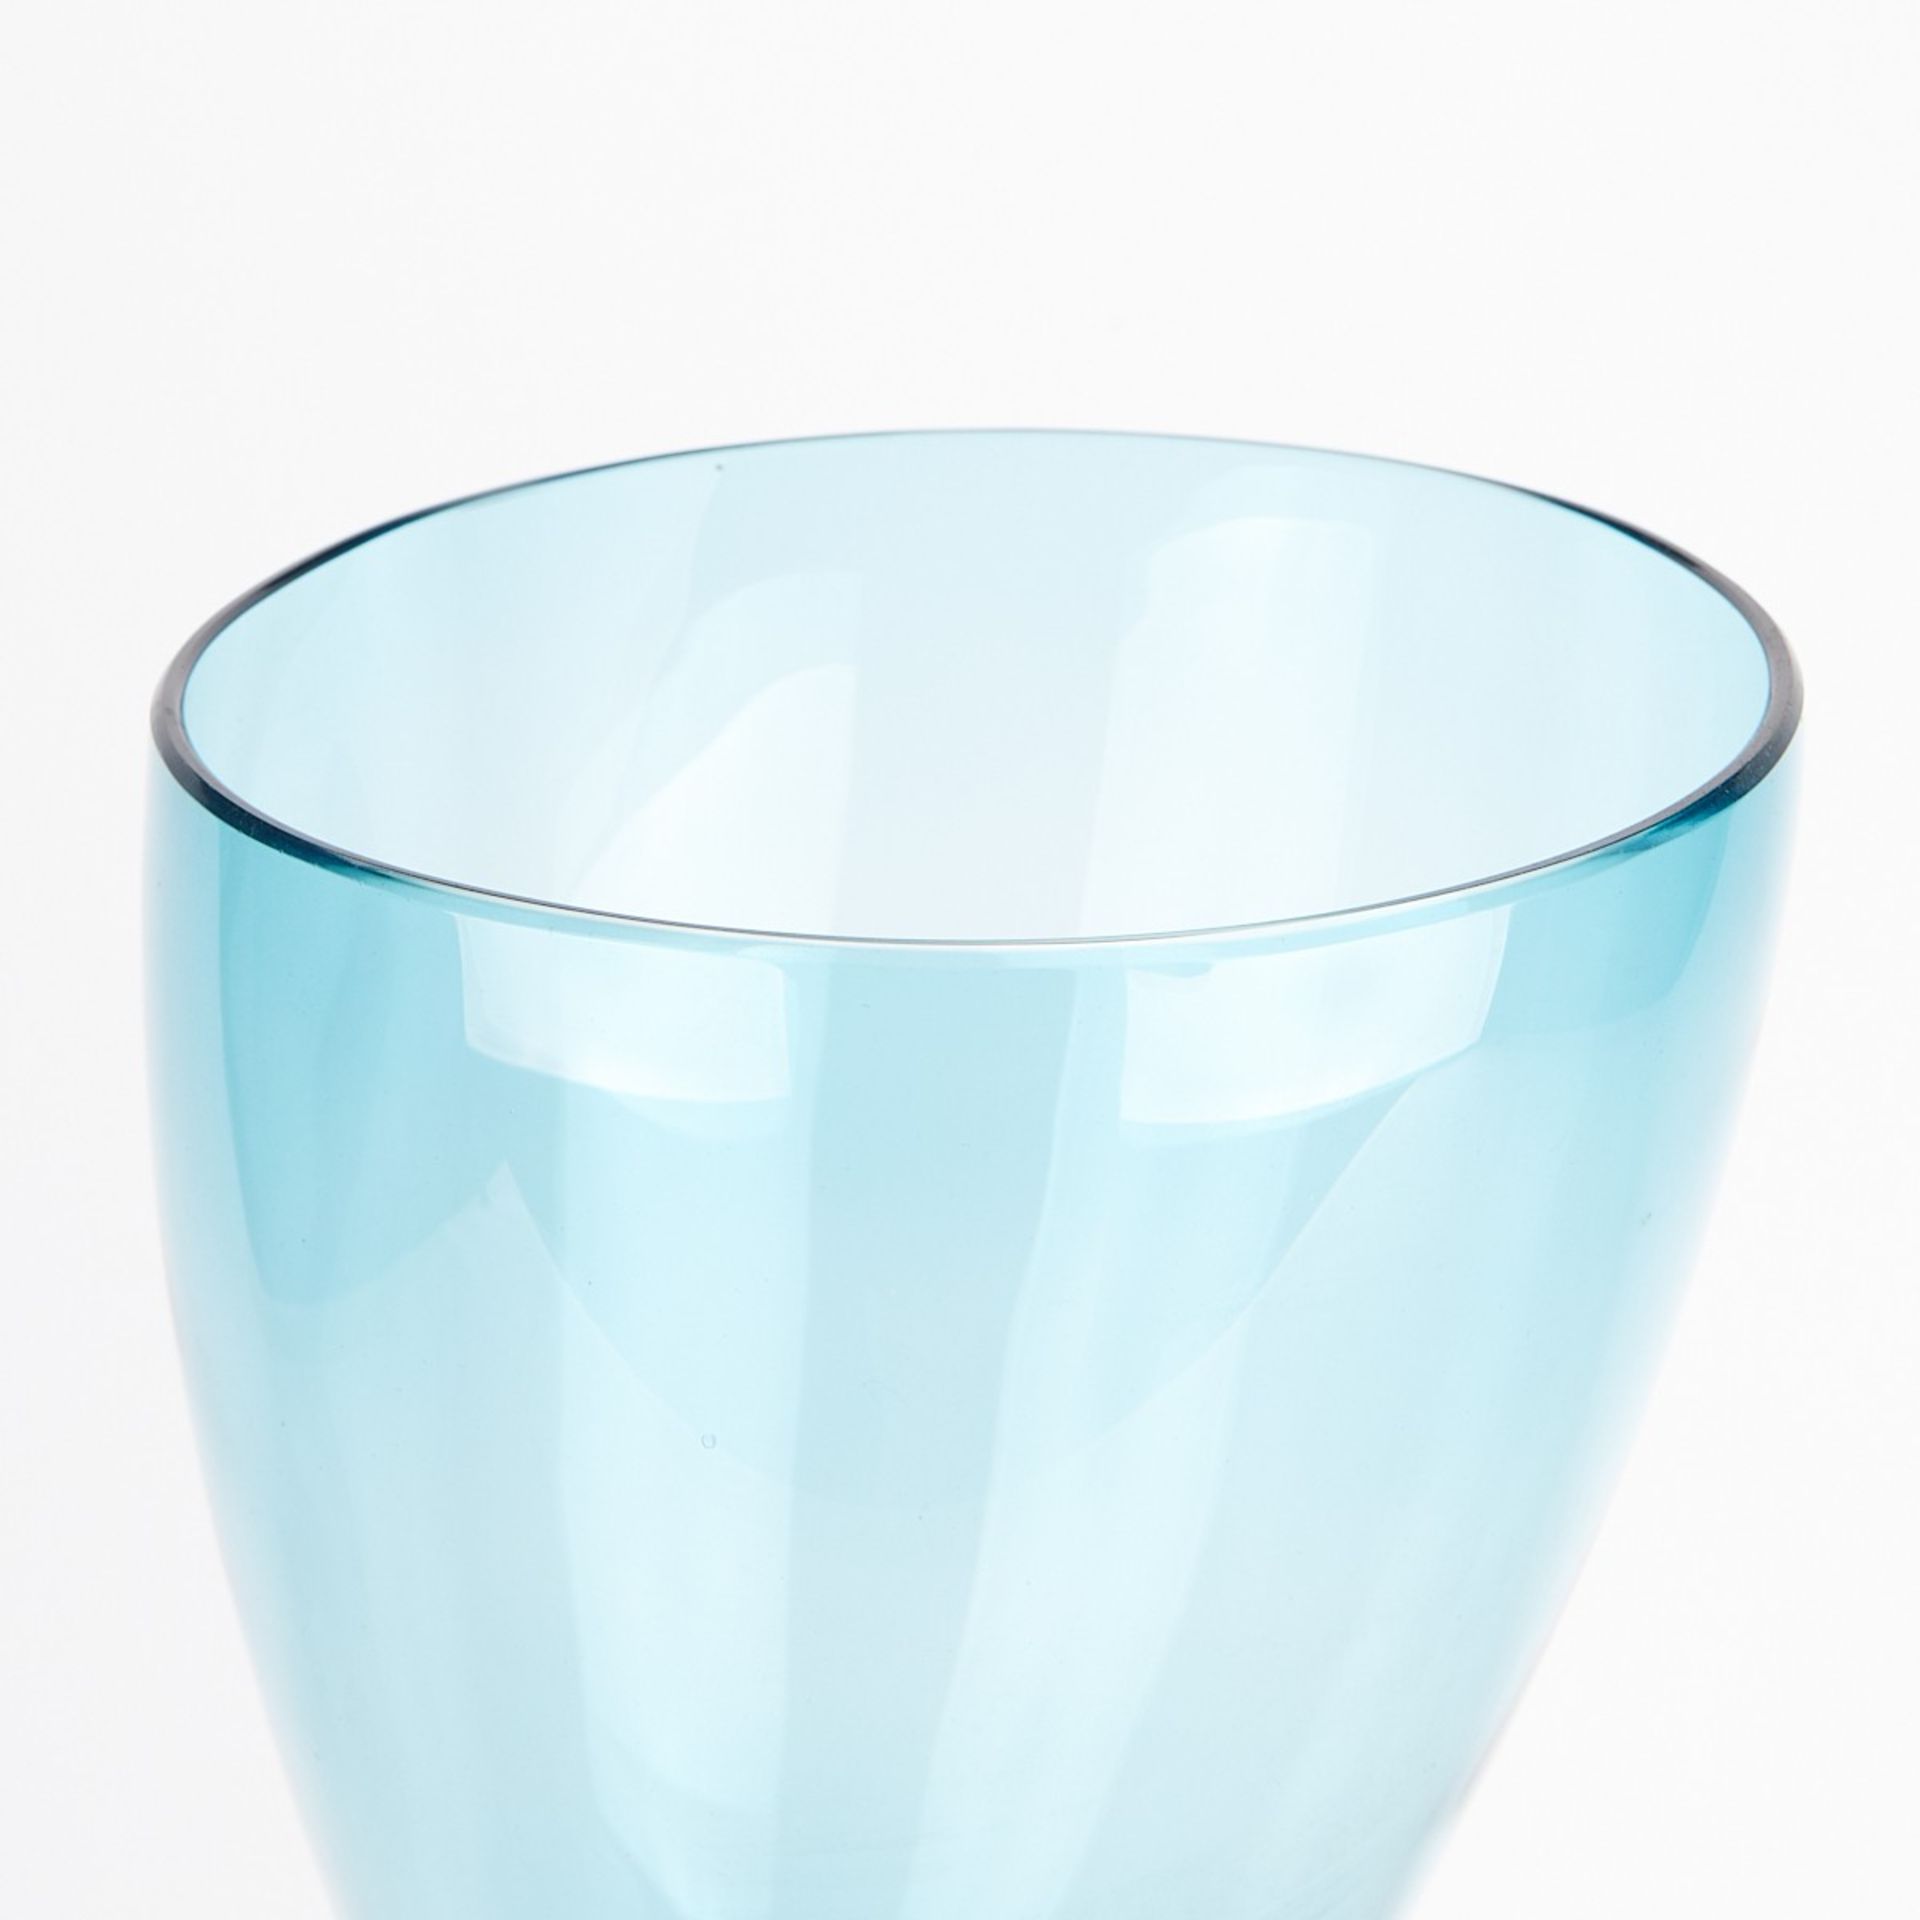 Richard Royal "Relationship" Series Glass Vase - Bild 7 aus 8